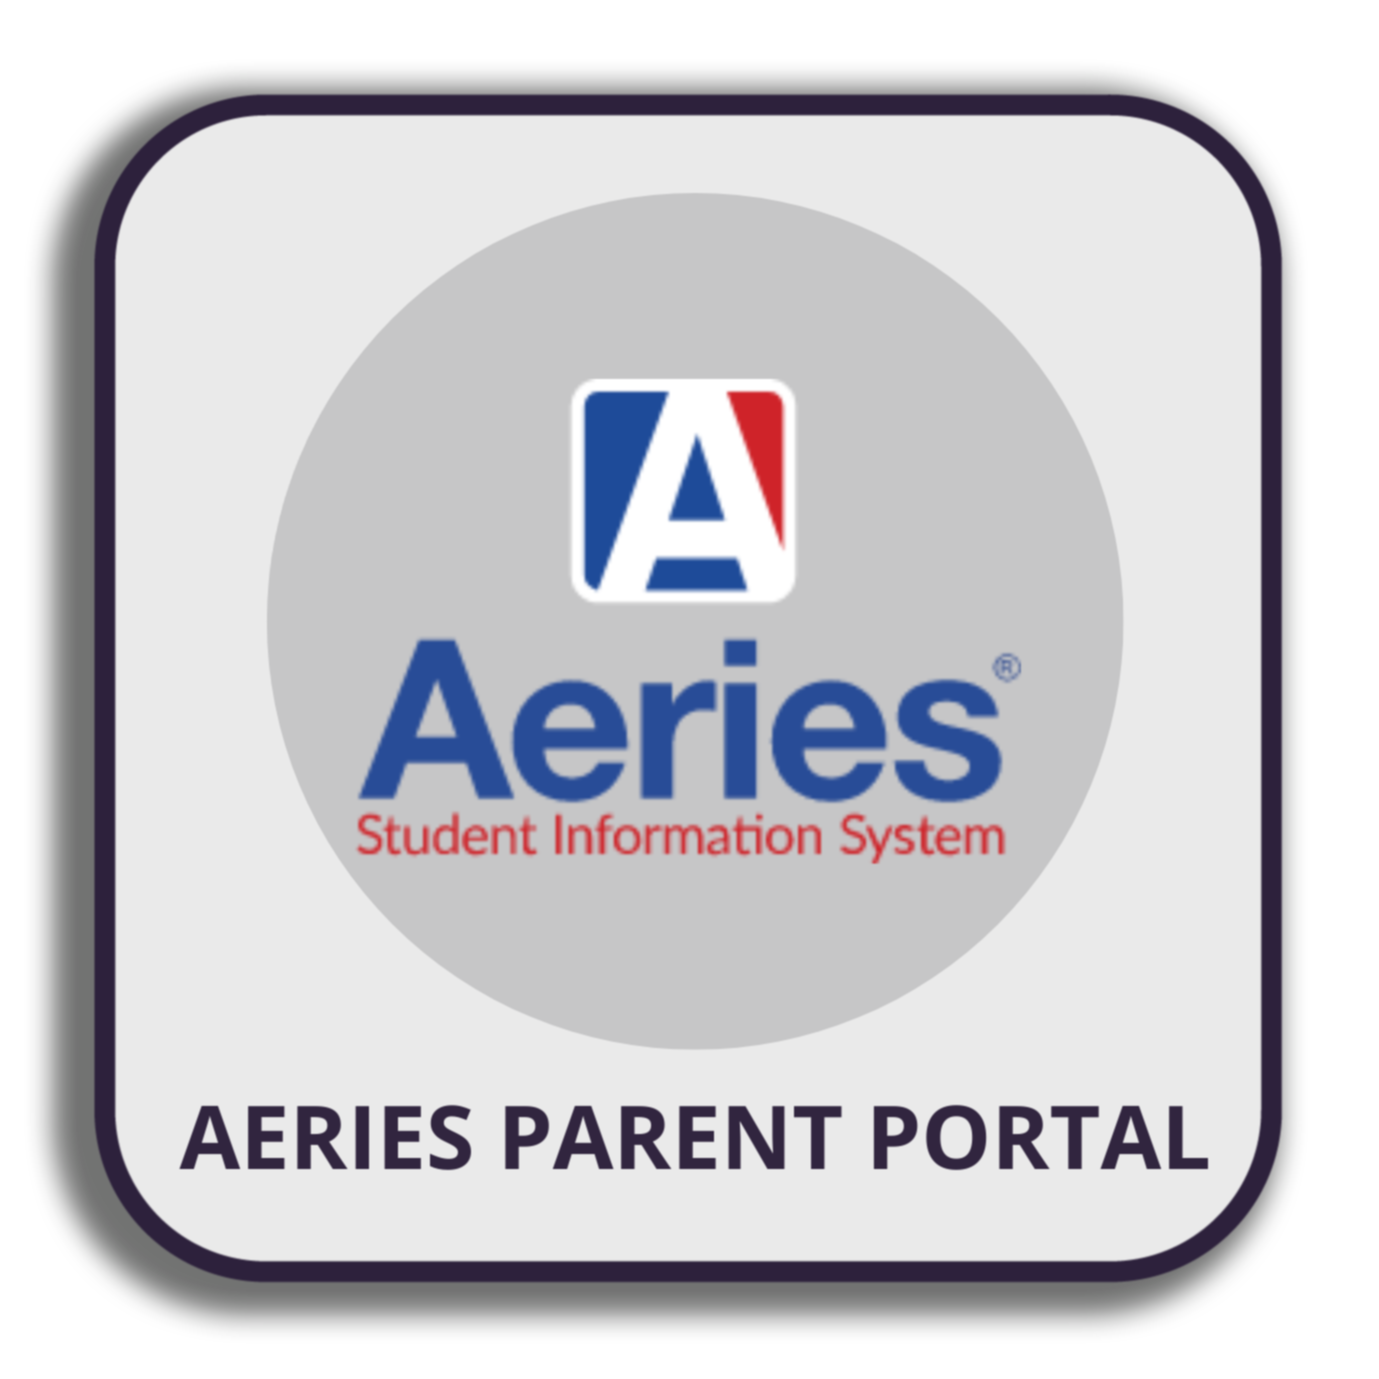 Aeries Student Information System; Aeries Parent Portal